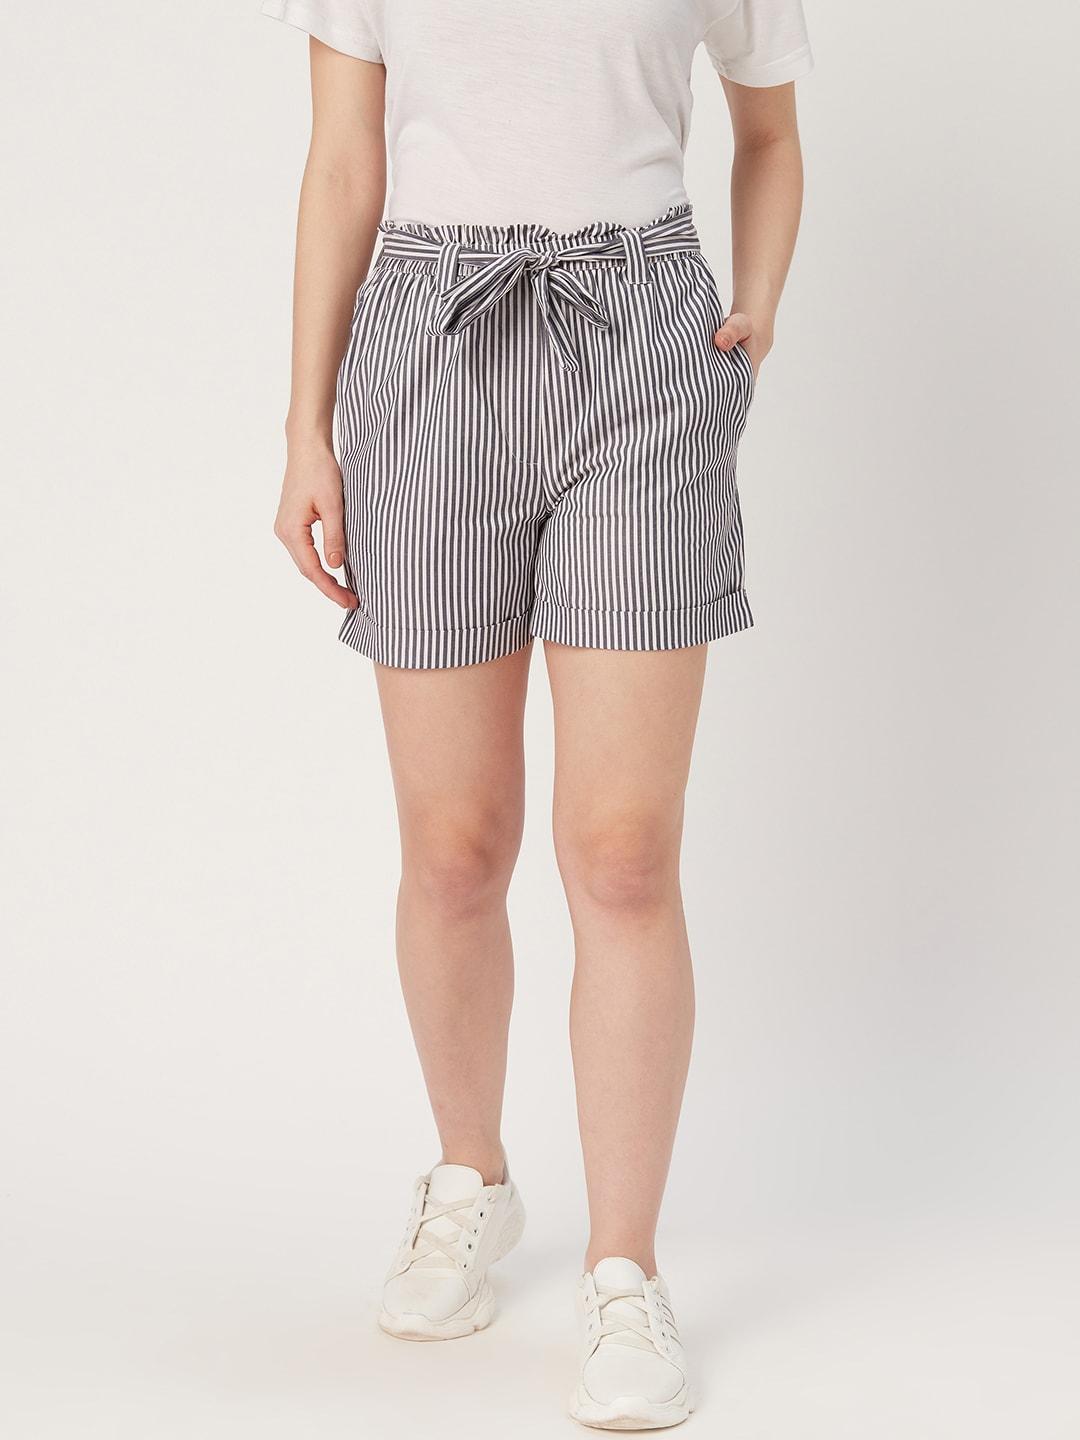 style quotient women navy blue & white striped regular fit paper bag shorts